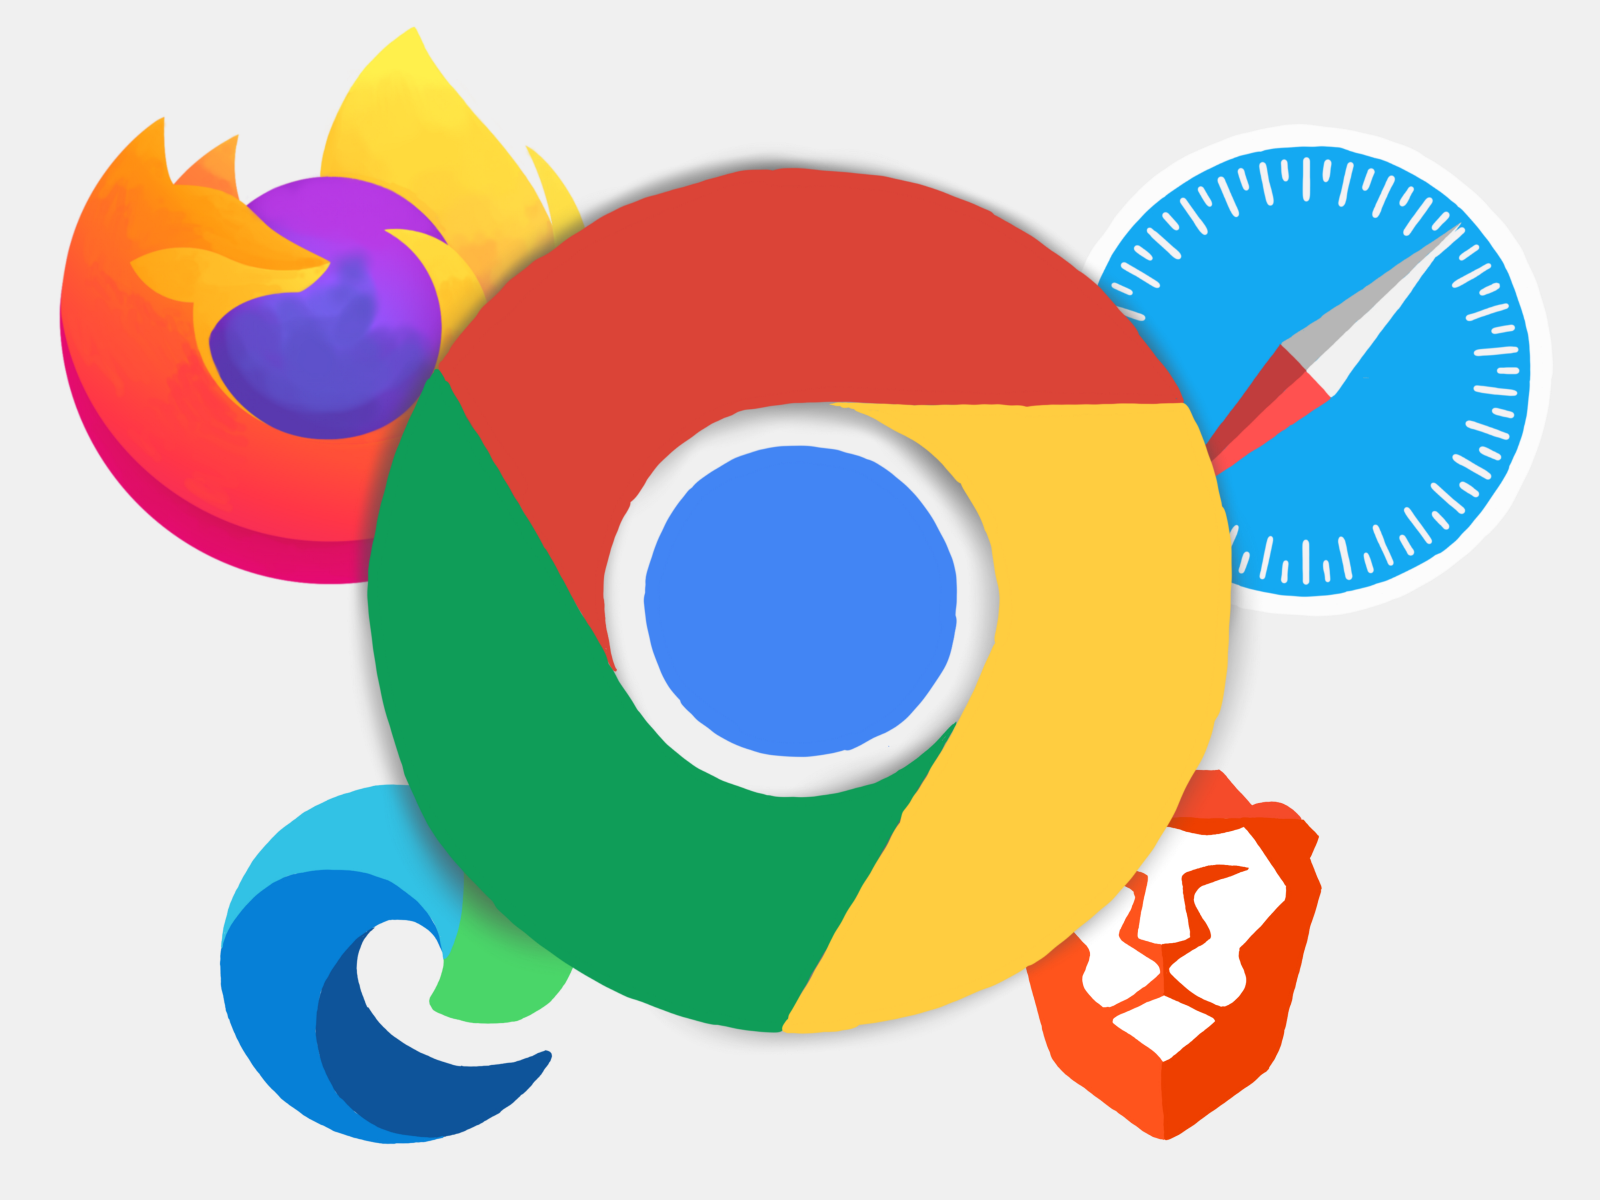 An illustration of various major browser logos.